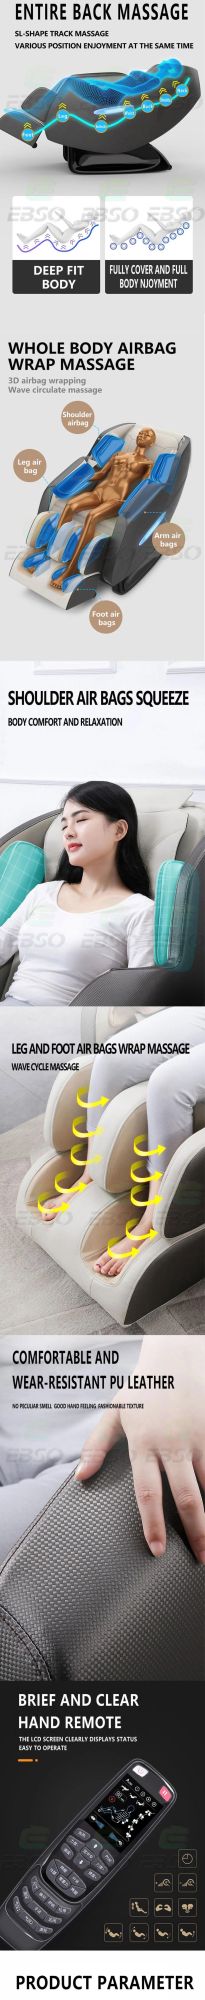 Full Body Modern Massage Chair with LED Breathing Light